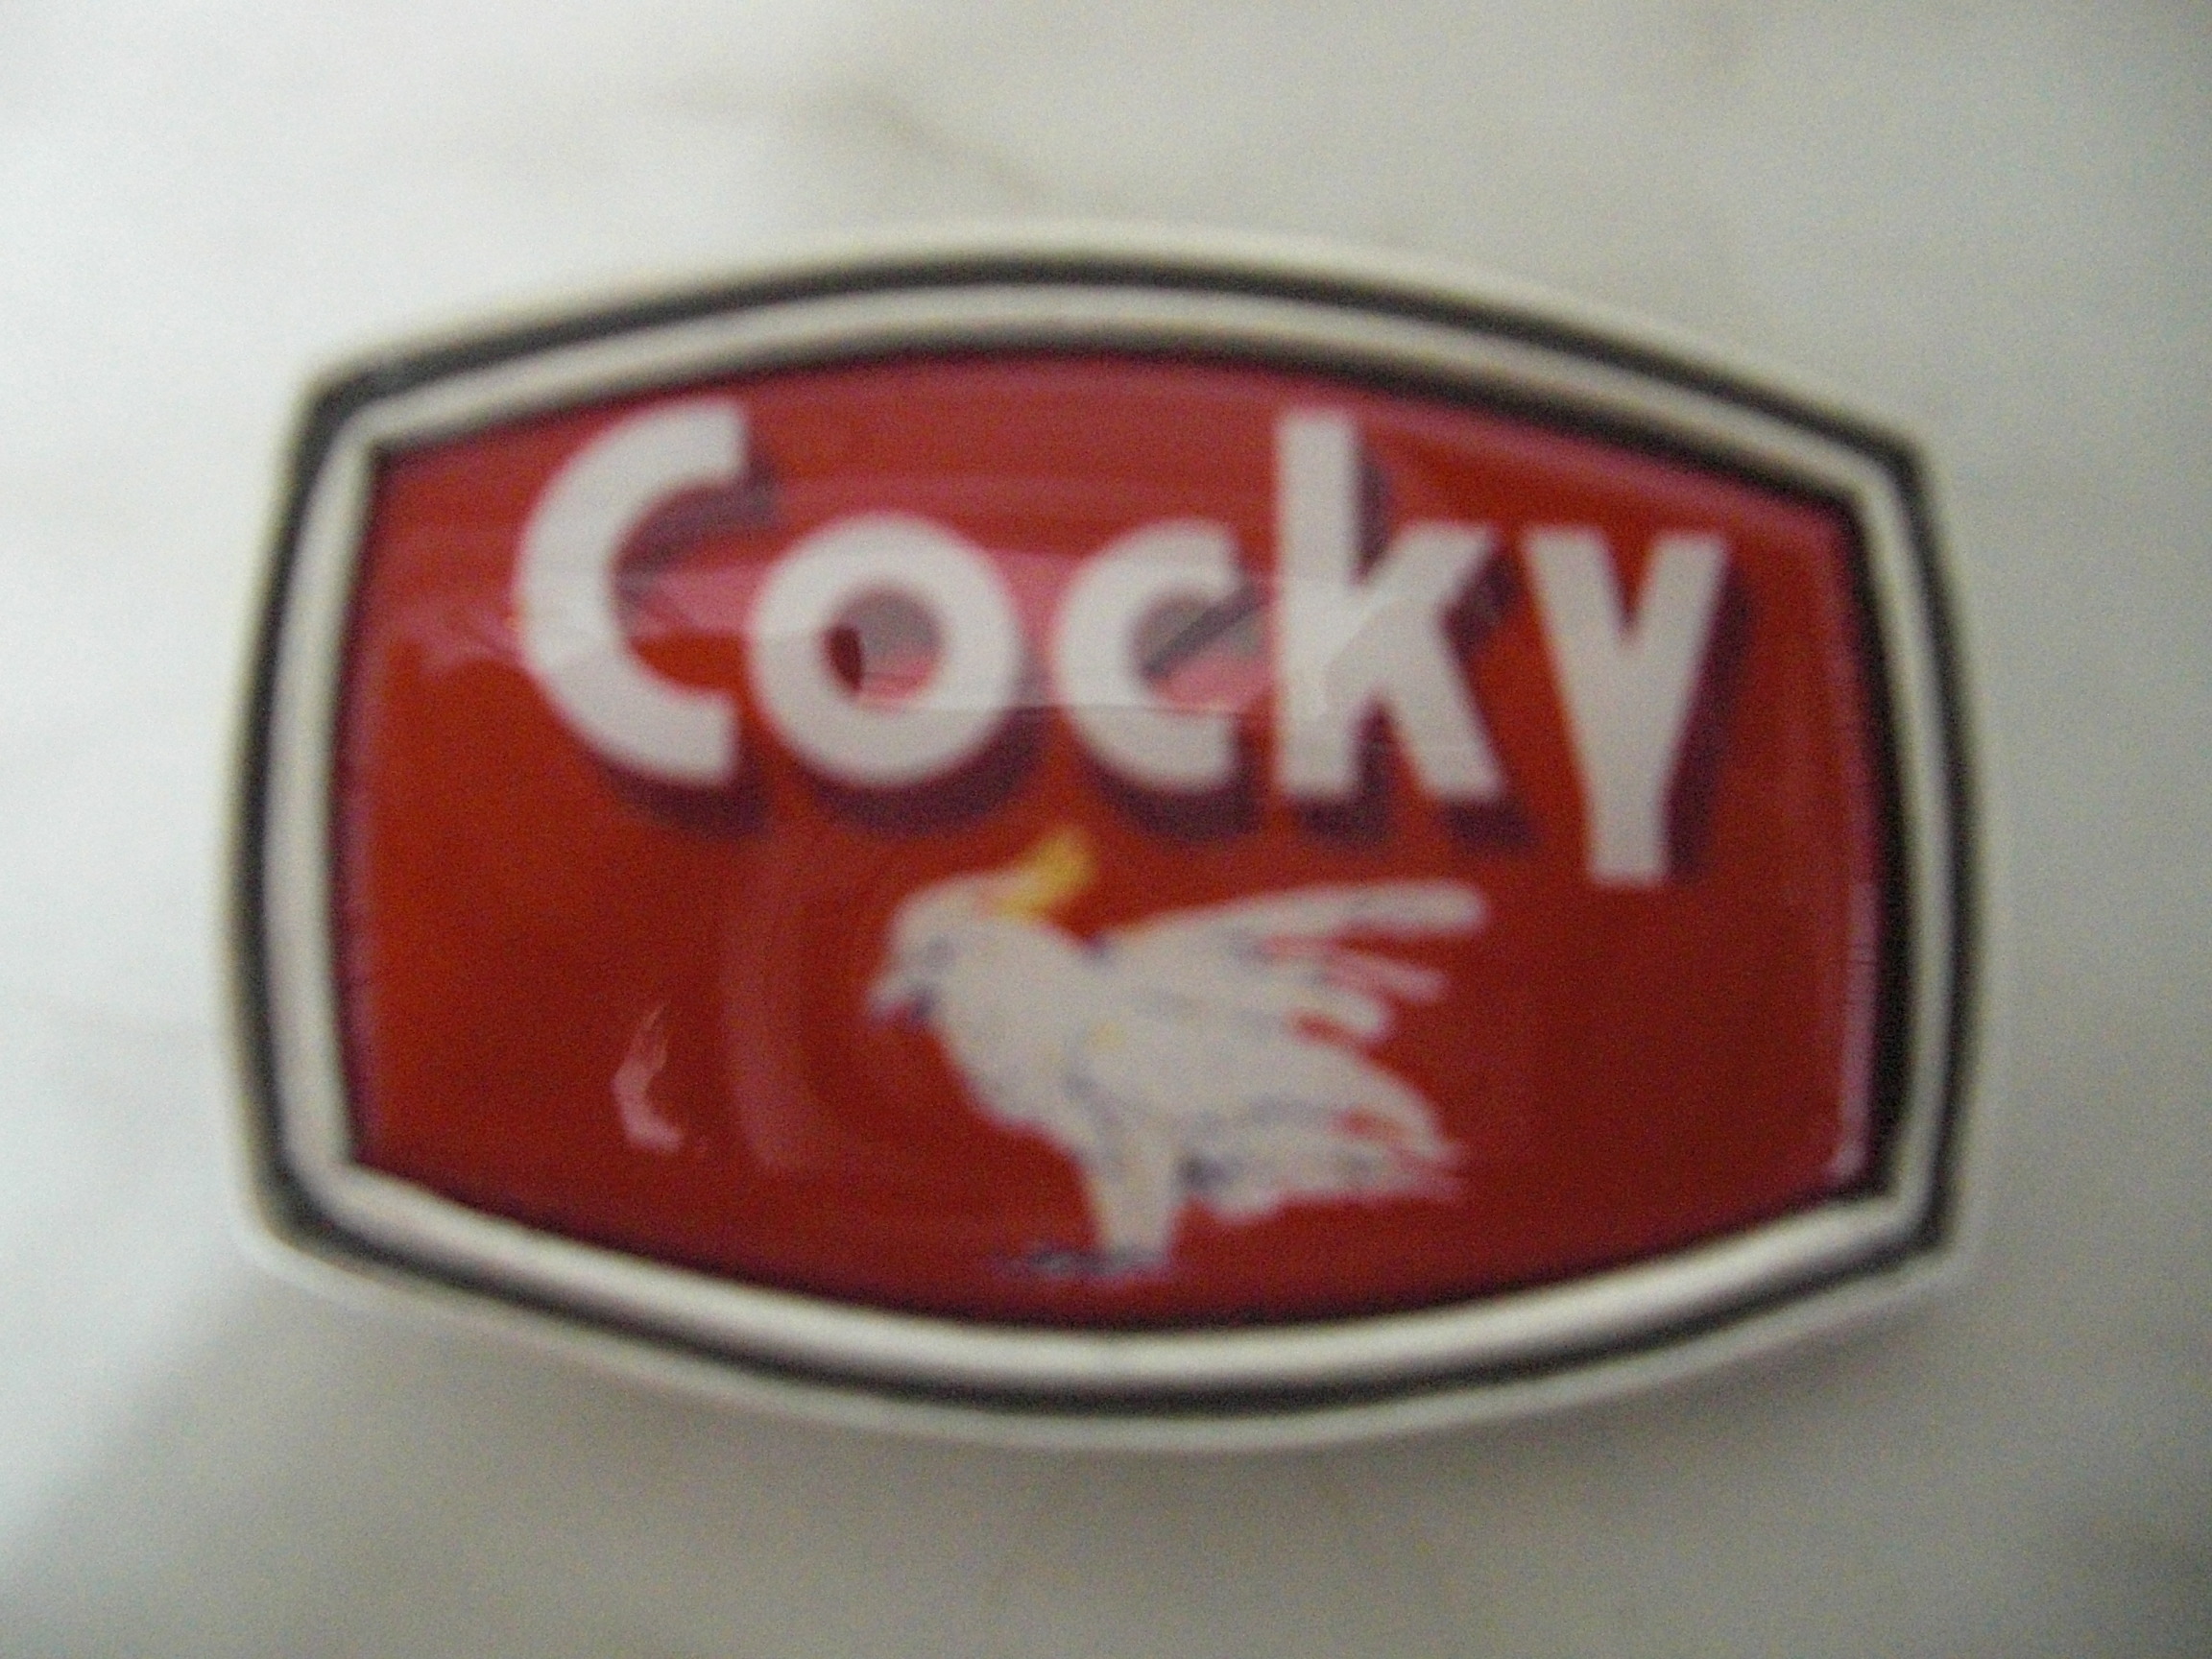 Cocky Belt